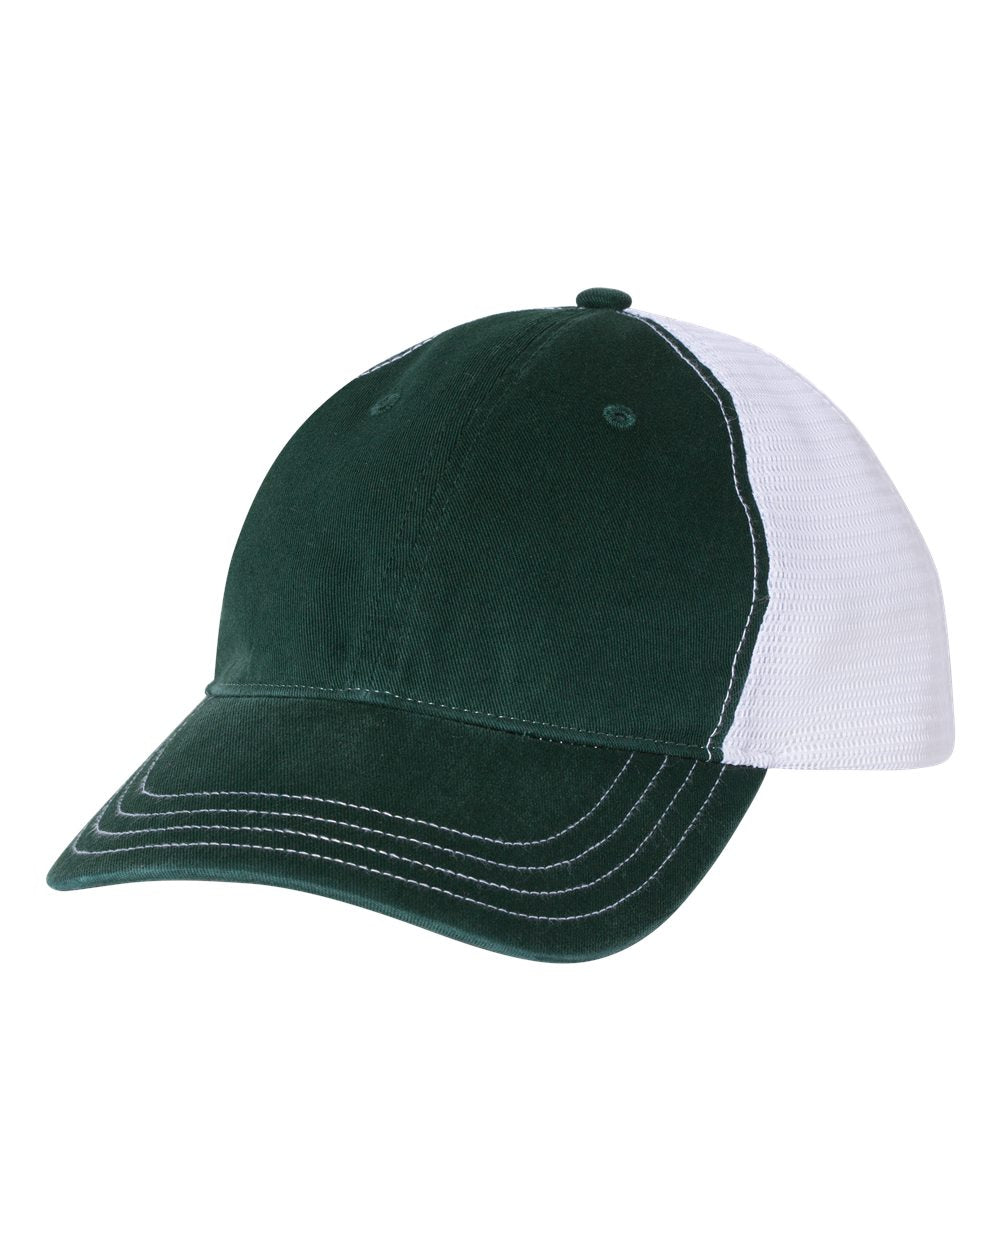 richardson cap dark green white